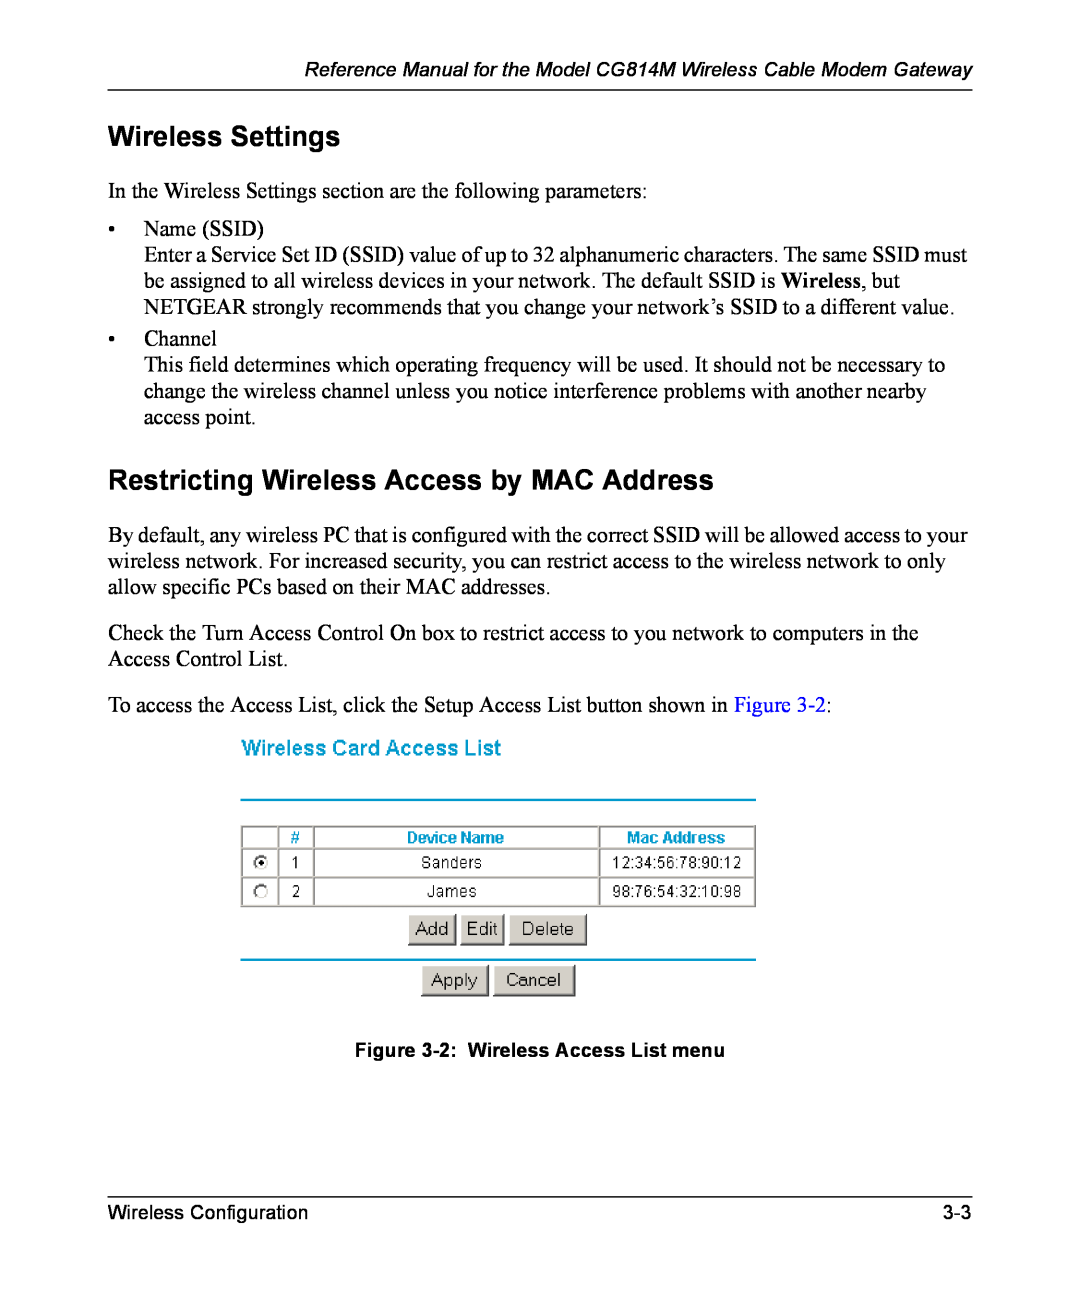 NETGEAR CG814M manual Wireless Settings, Restricting Wireless Access by MAC Address 